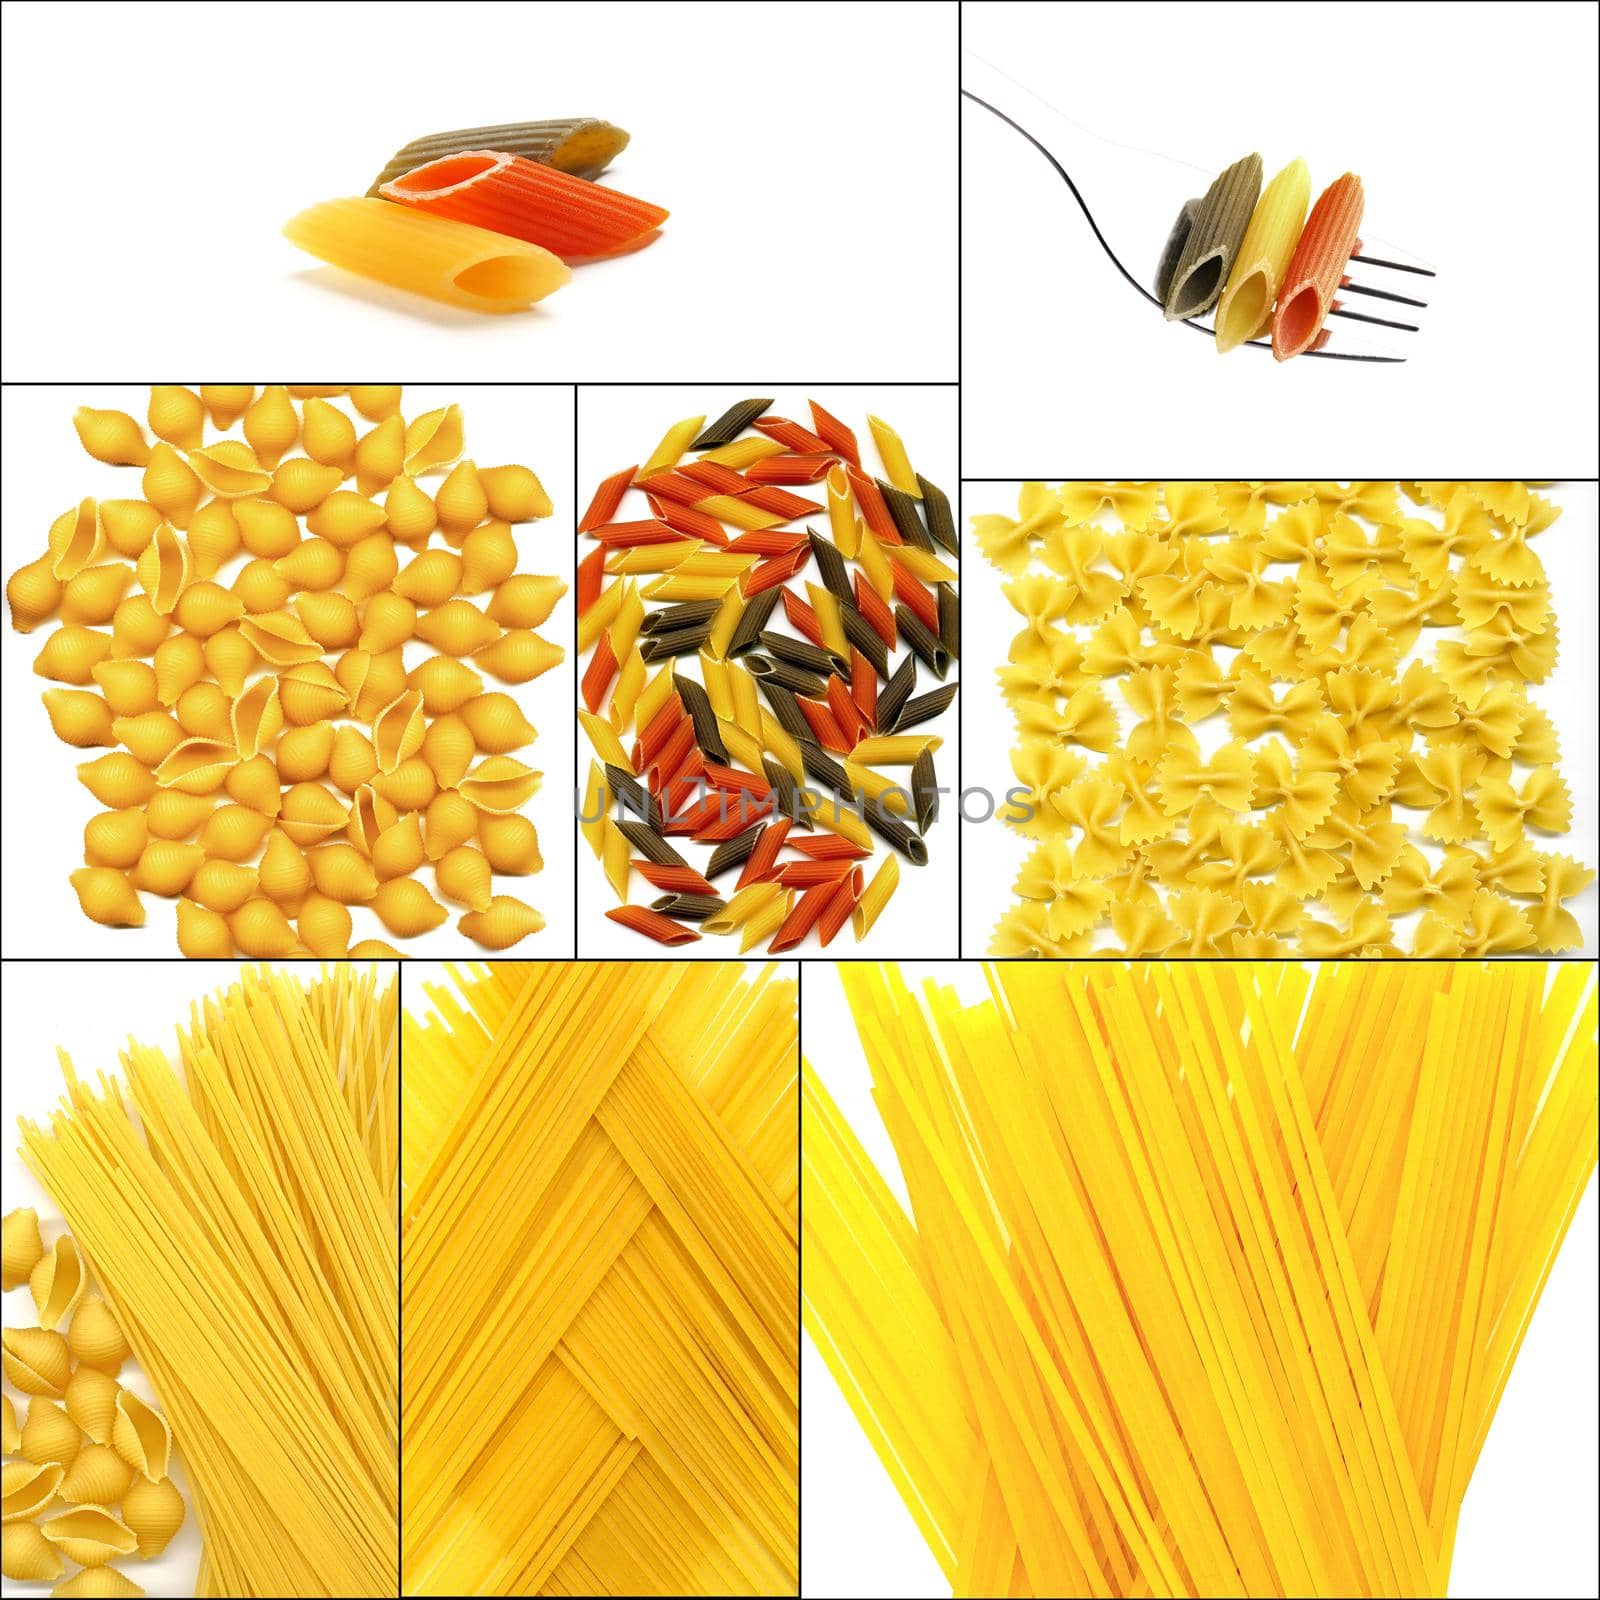 various type of Italian pasta collage by keko64